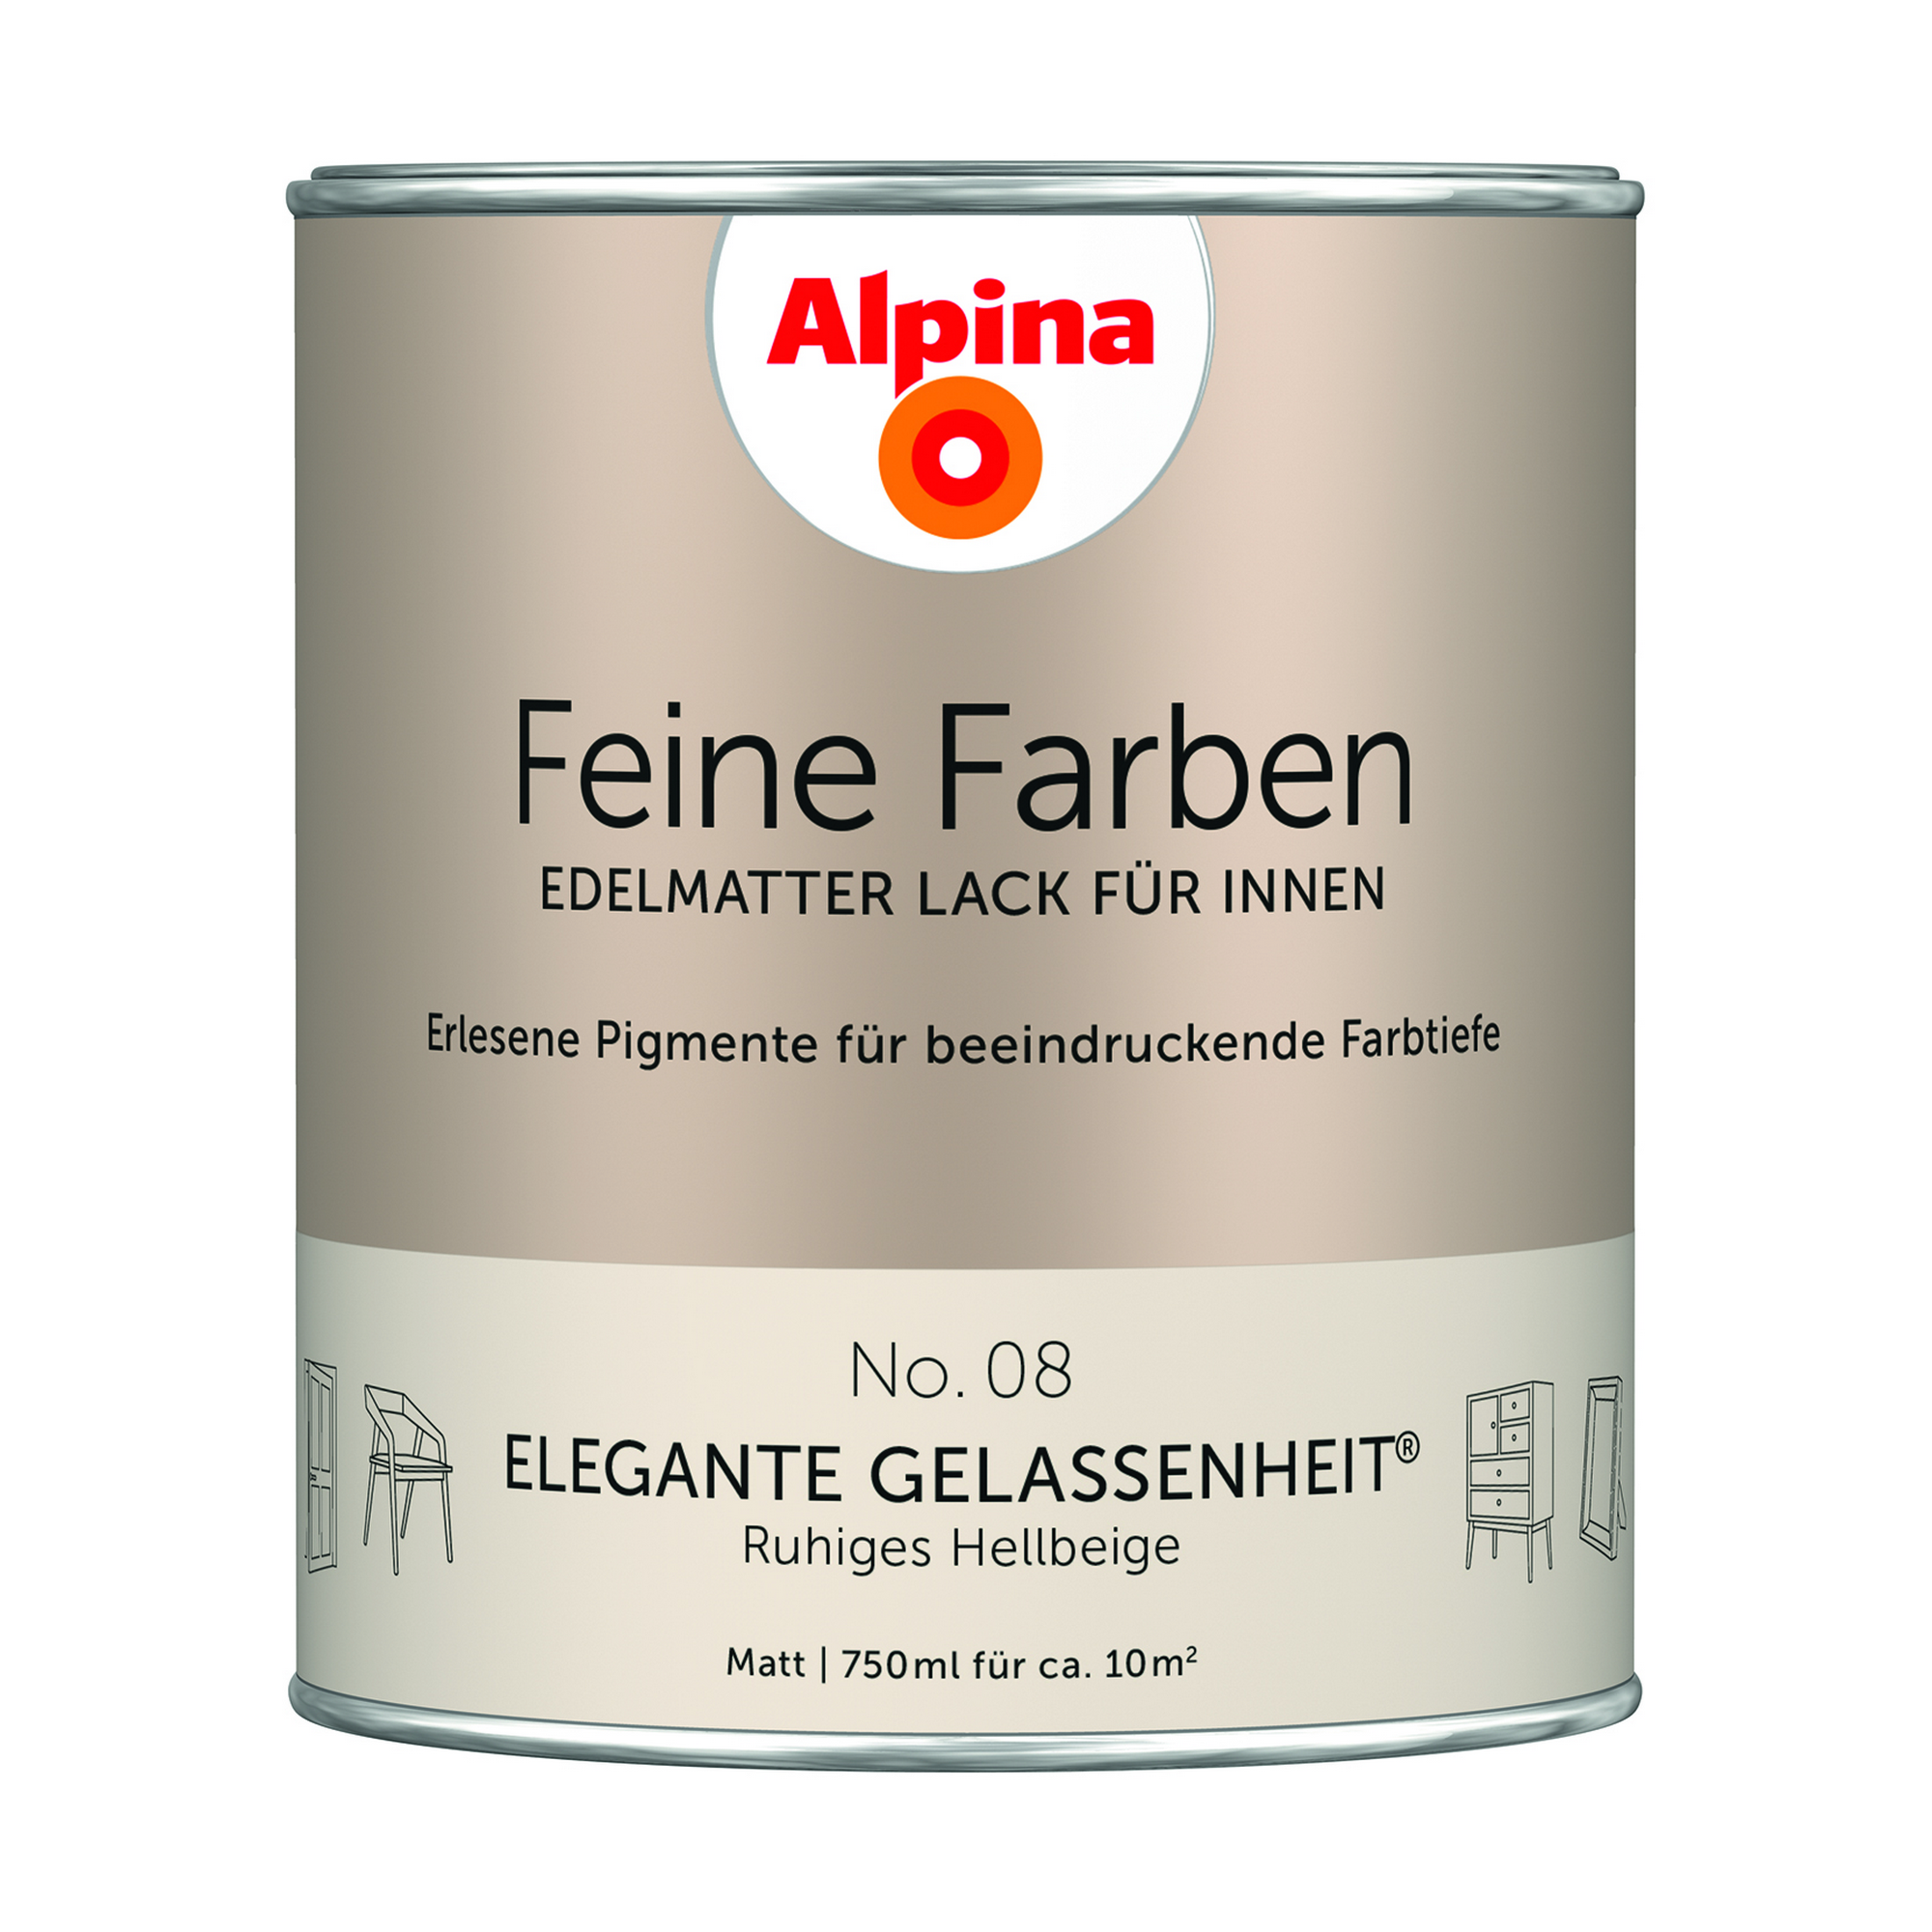 Feine Farben 'Elegante Gelassenheit' hellbeige matt 750 ml + product picture